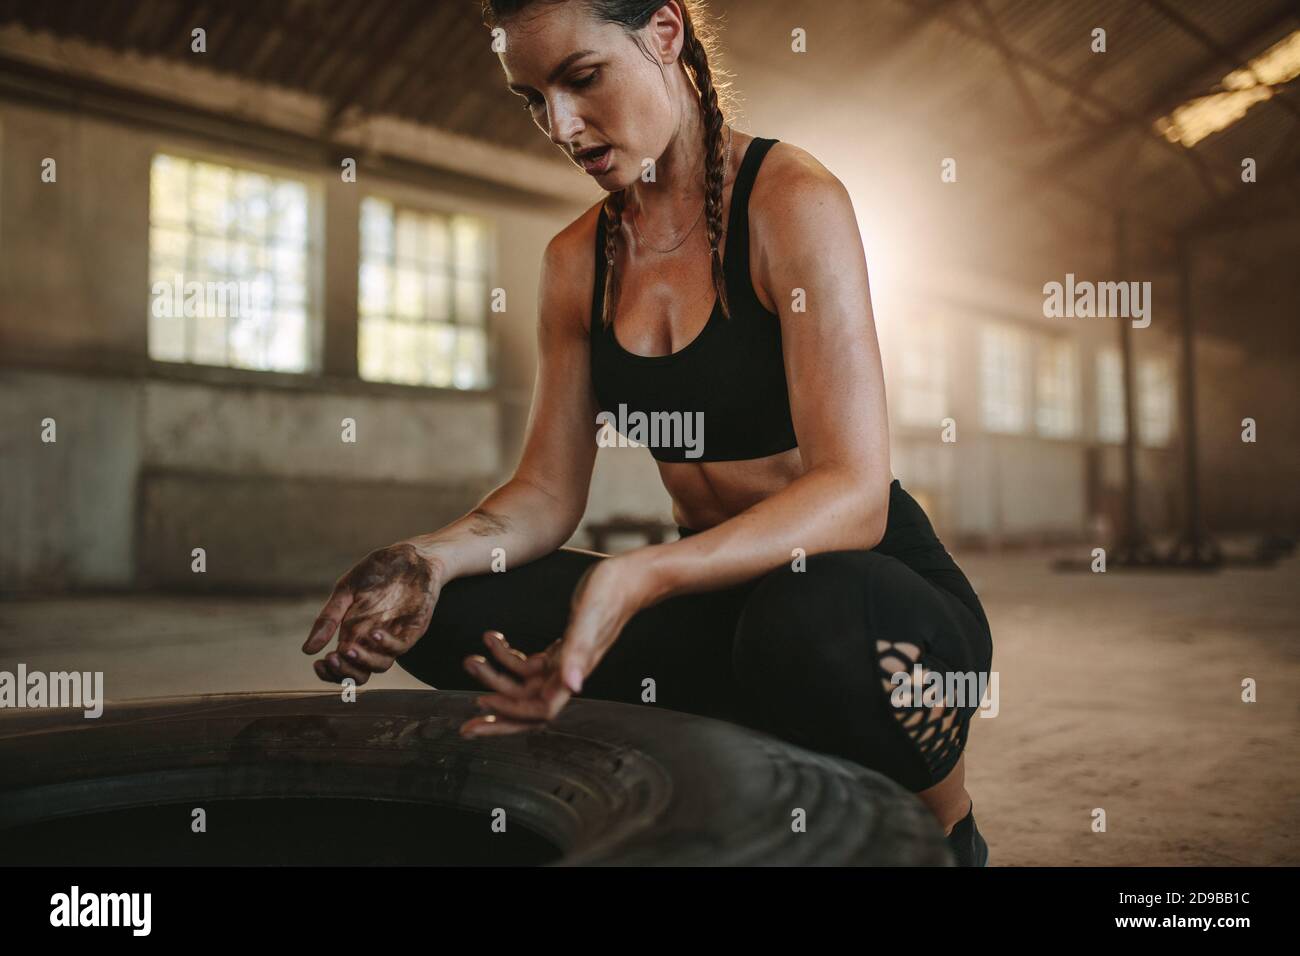 Muscular female athlete taking a break from cross training workout. Woman in black sportswear sitting by big tire in empty warehouse. Stock Photo